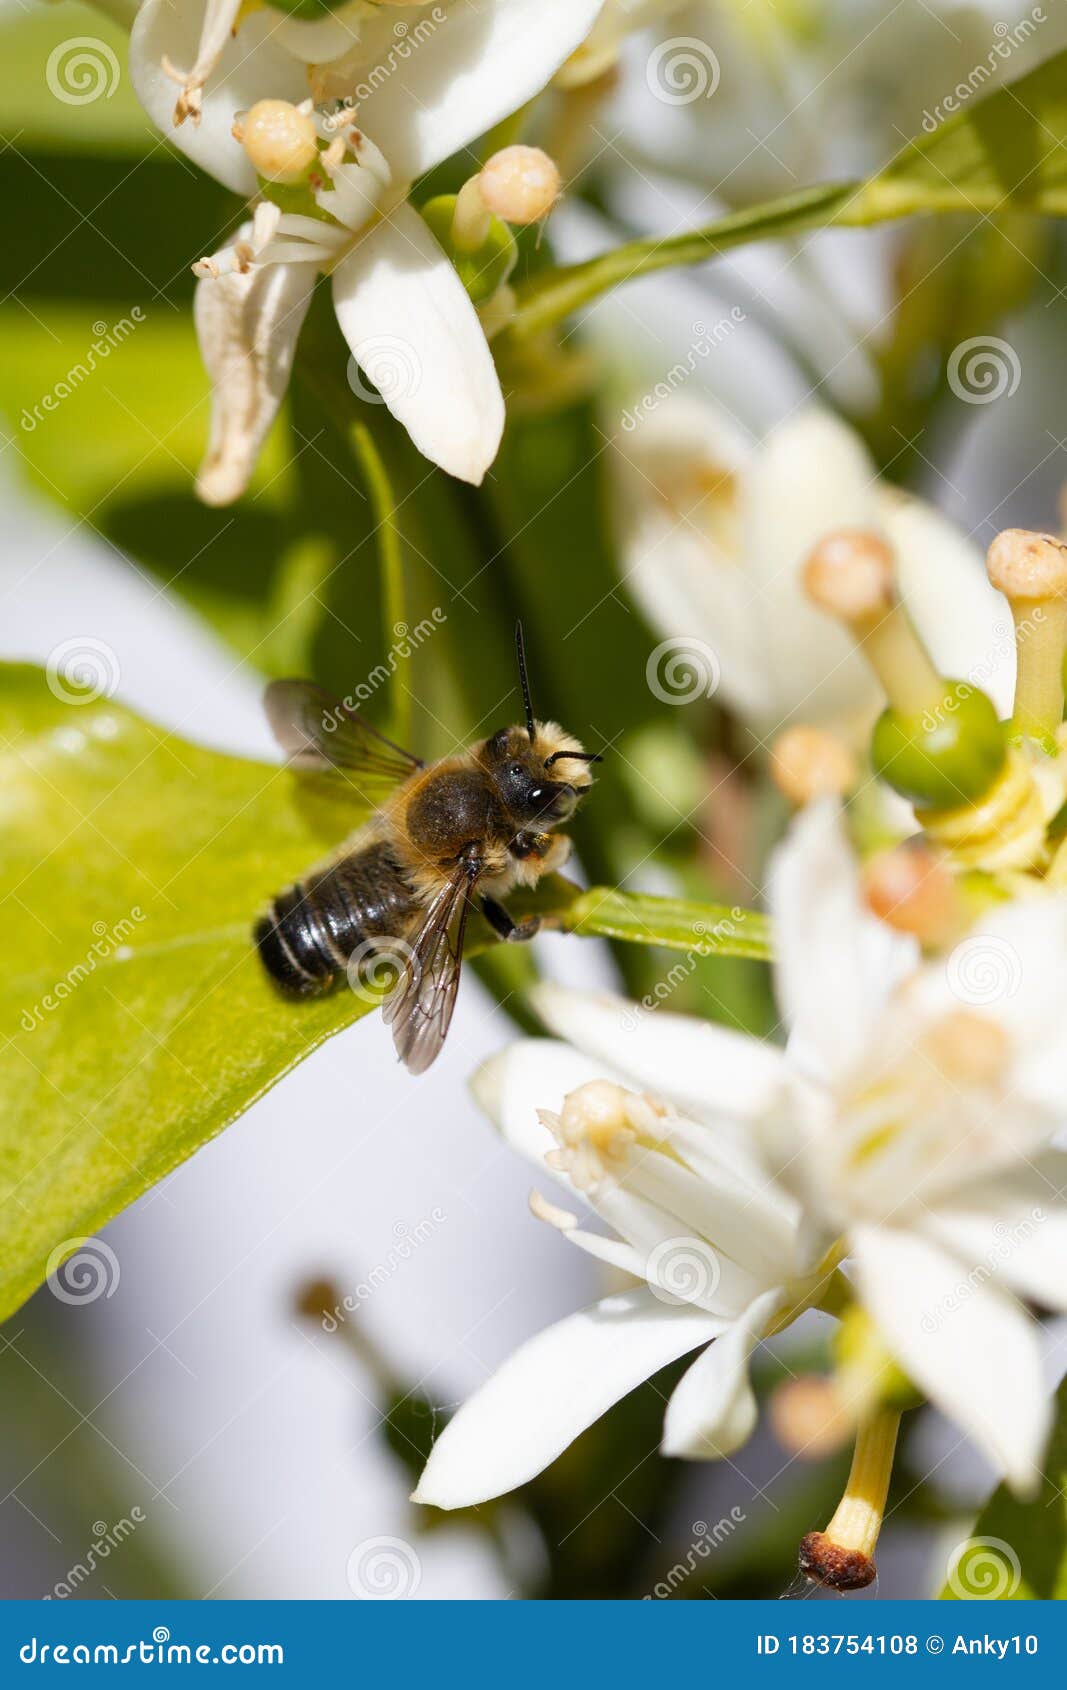 Bee On White Orange Blossom In Natural Light Stock Photo Image Of Flower Branch 183754108